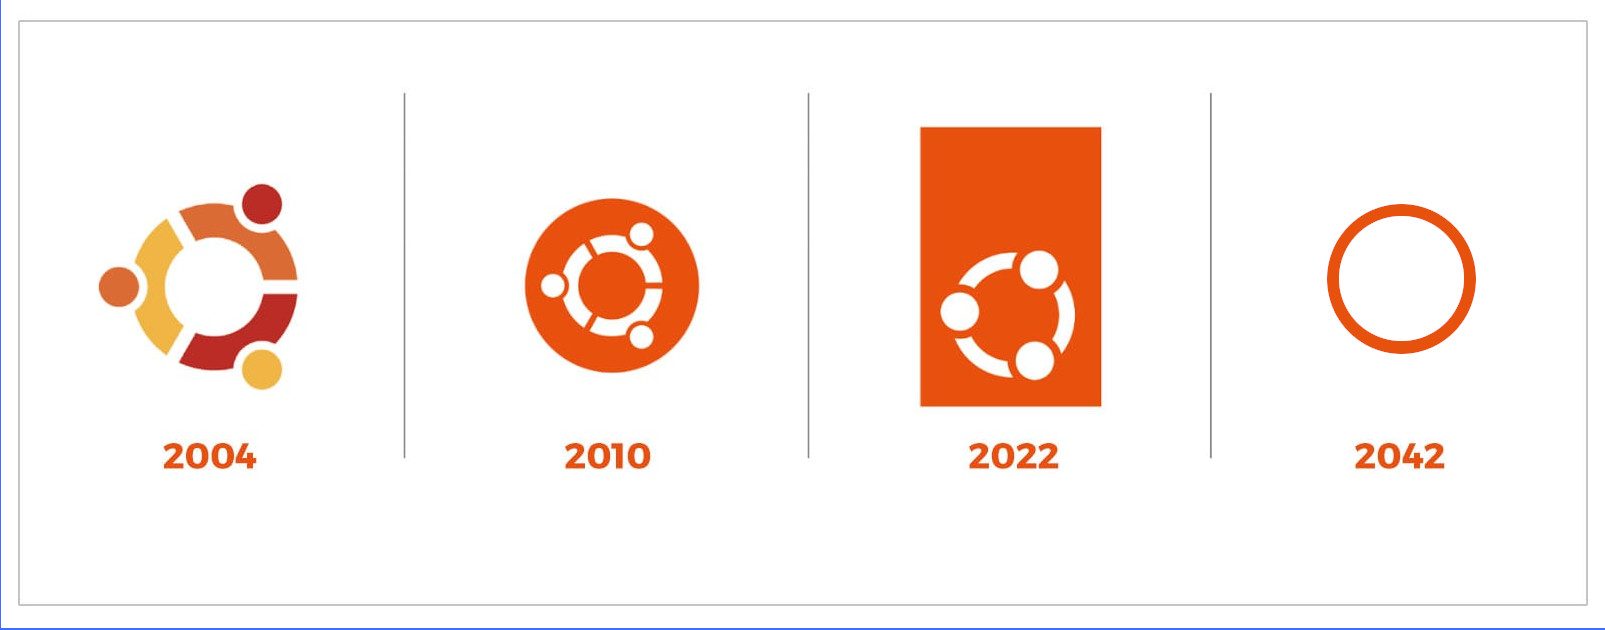 Future of Ubuntu's logo